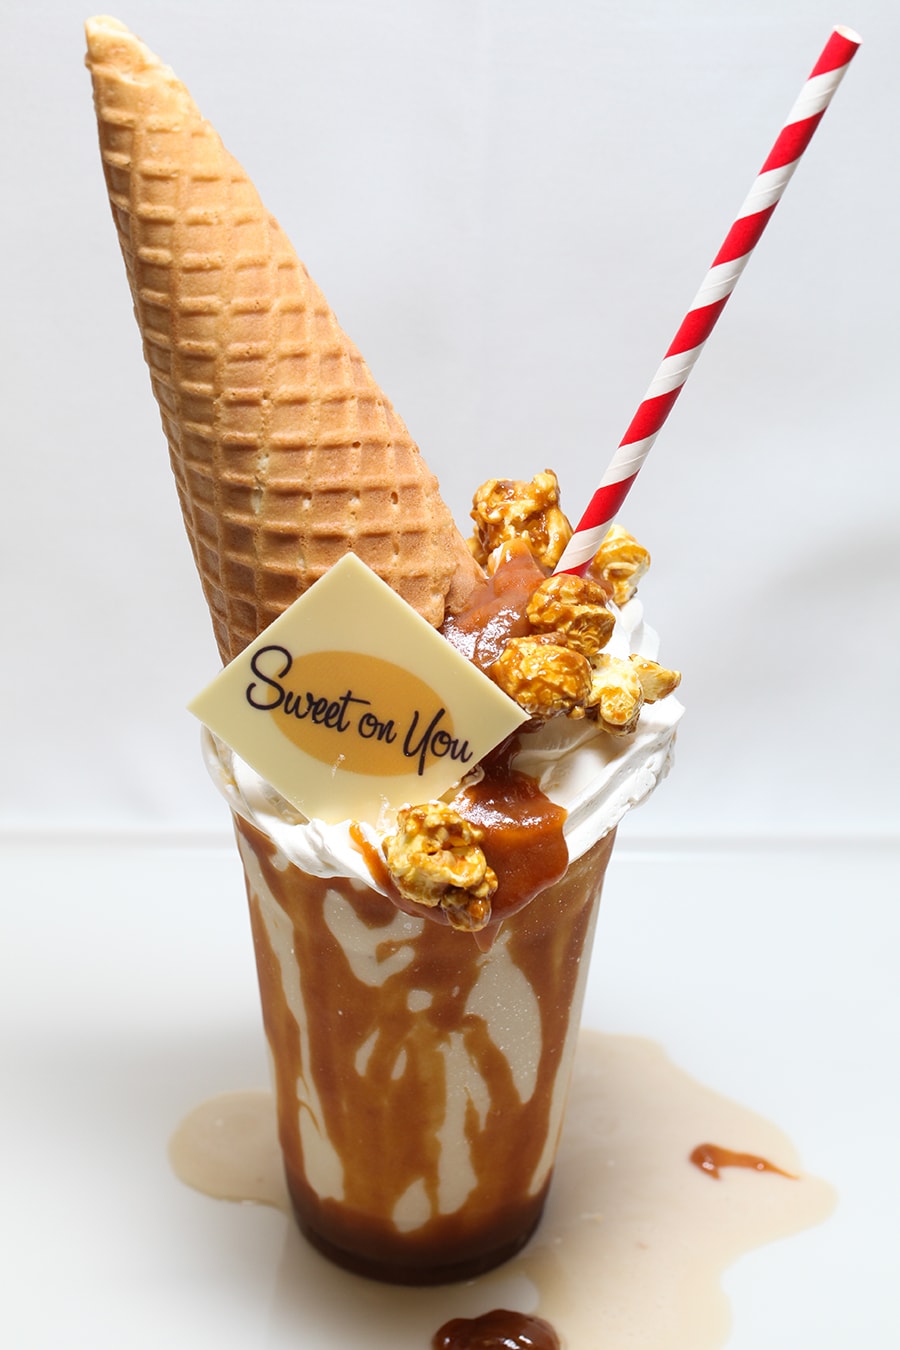 Recipe: Caramel Waffle Cone Milkshake at Sweet on You Aboard the Disney Fantasy